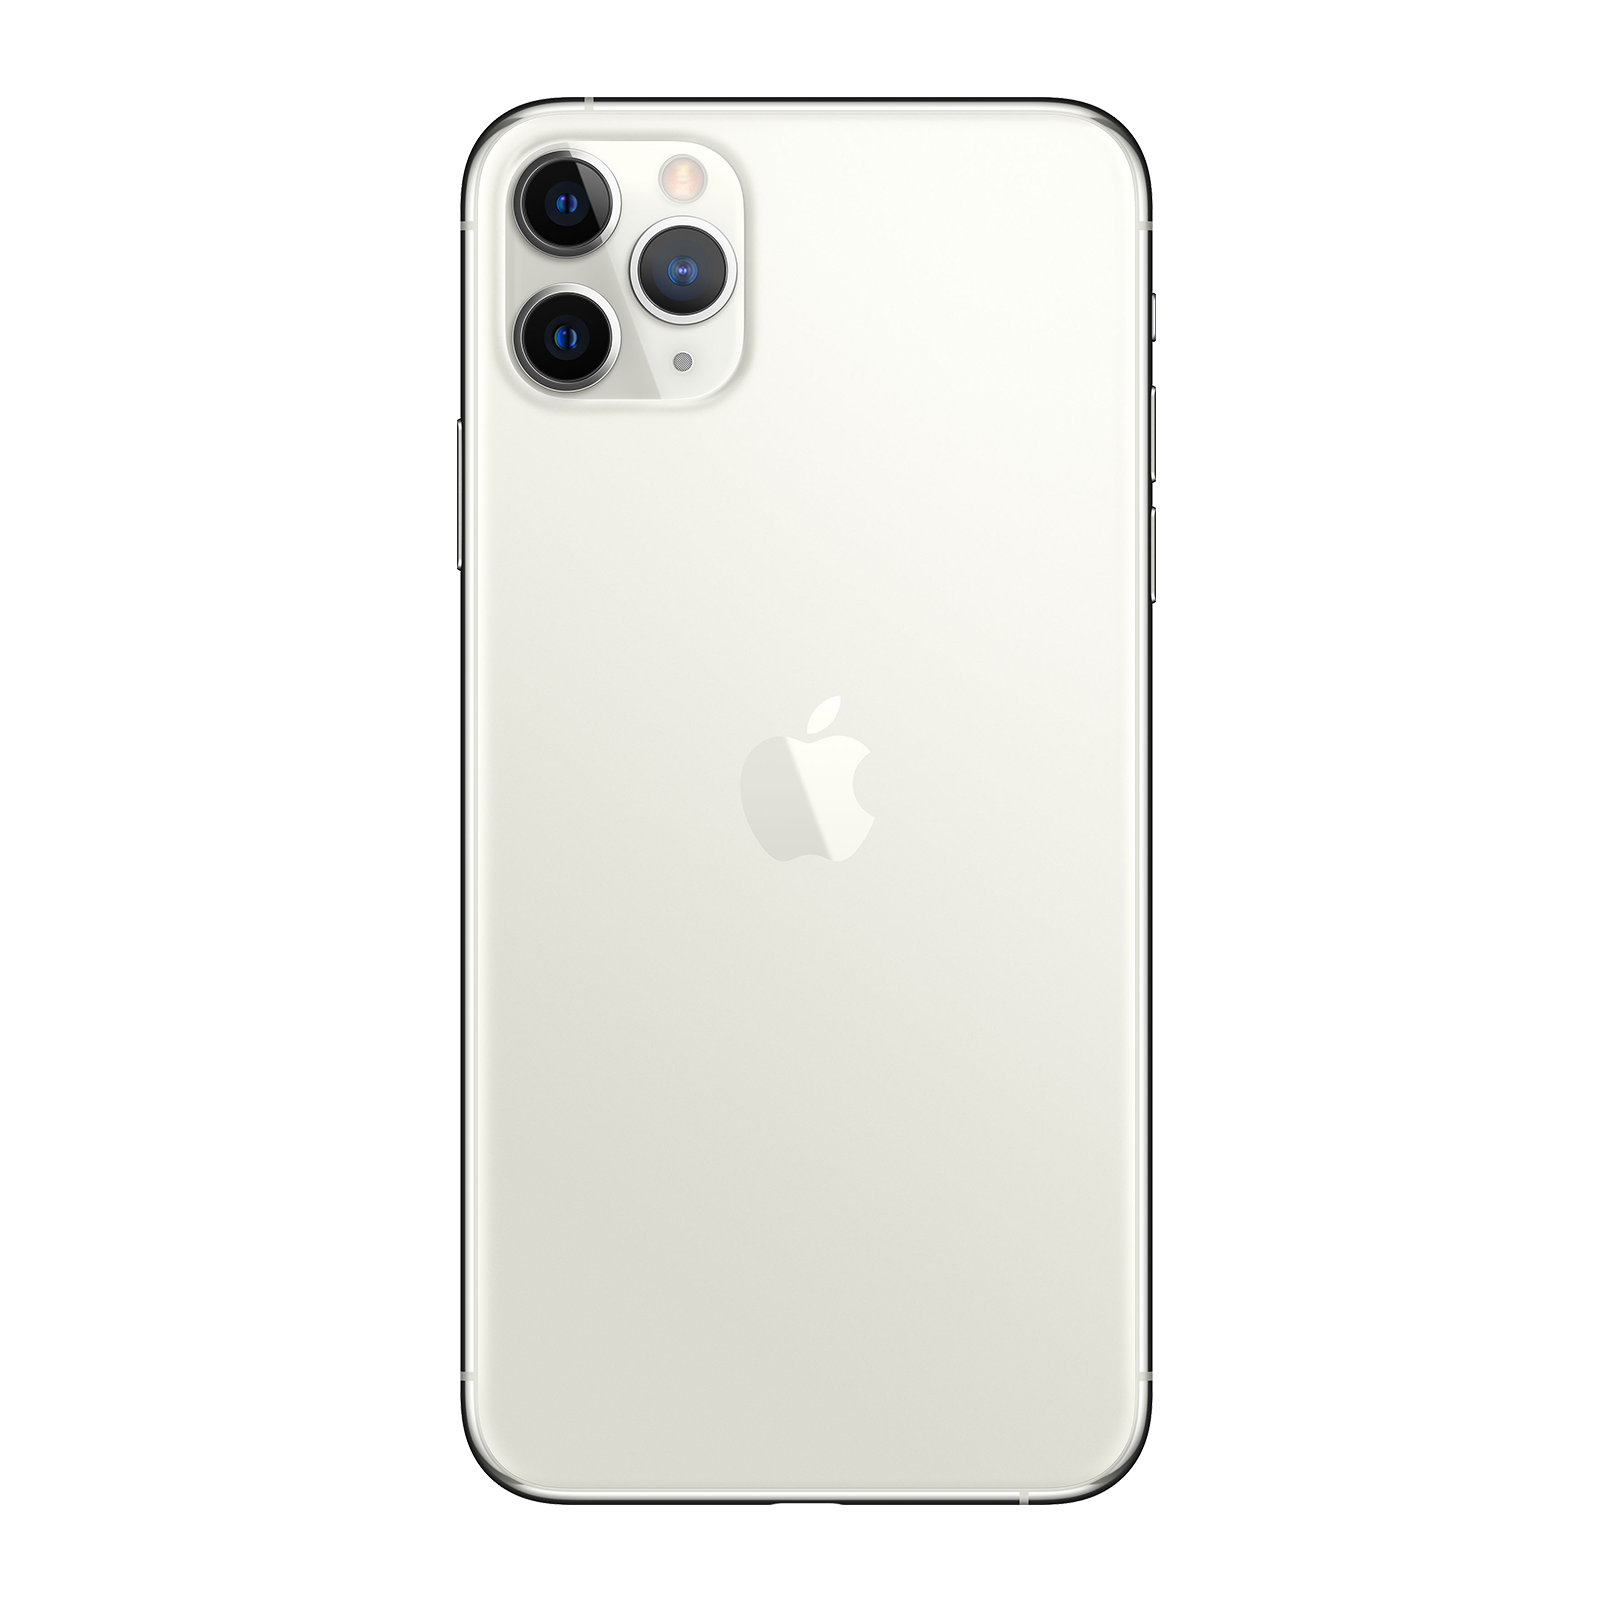 Apple iPhone 11 Pro 512GB Silver Pristine - AT&T